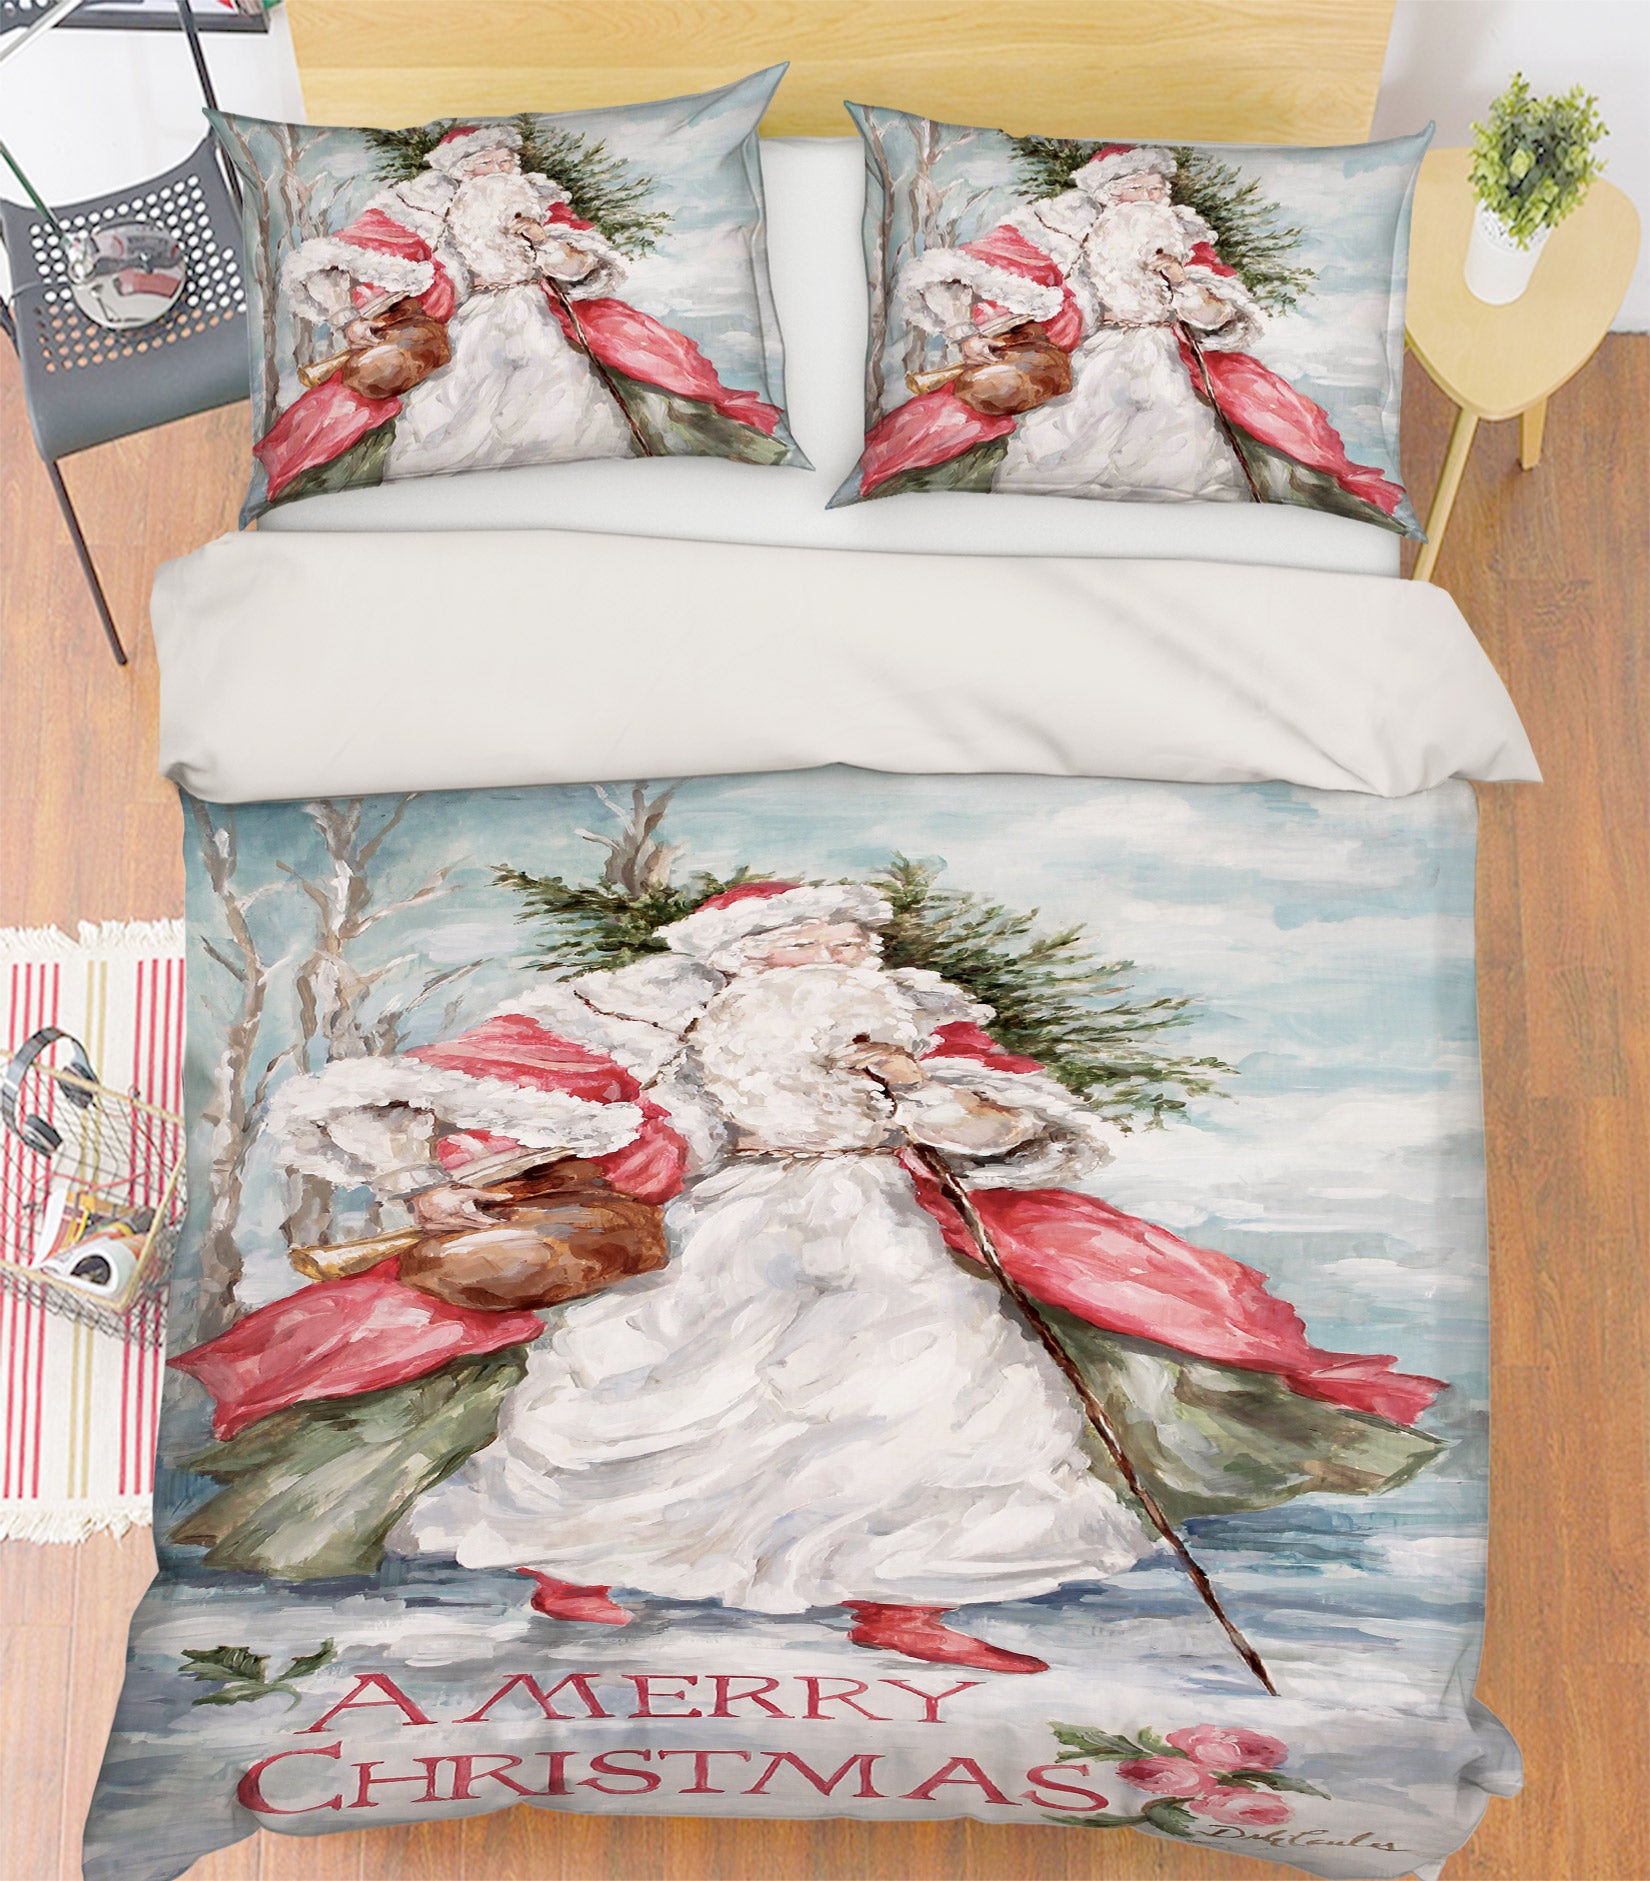 3D Santa Claus 2067 Debi Coules Bedding Bed Pillowcases Quilt